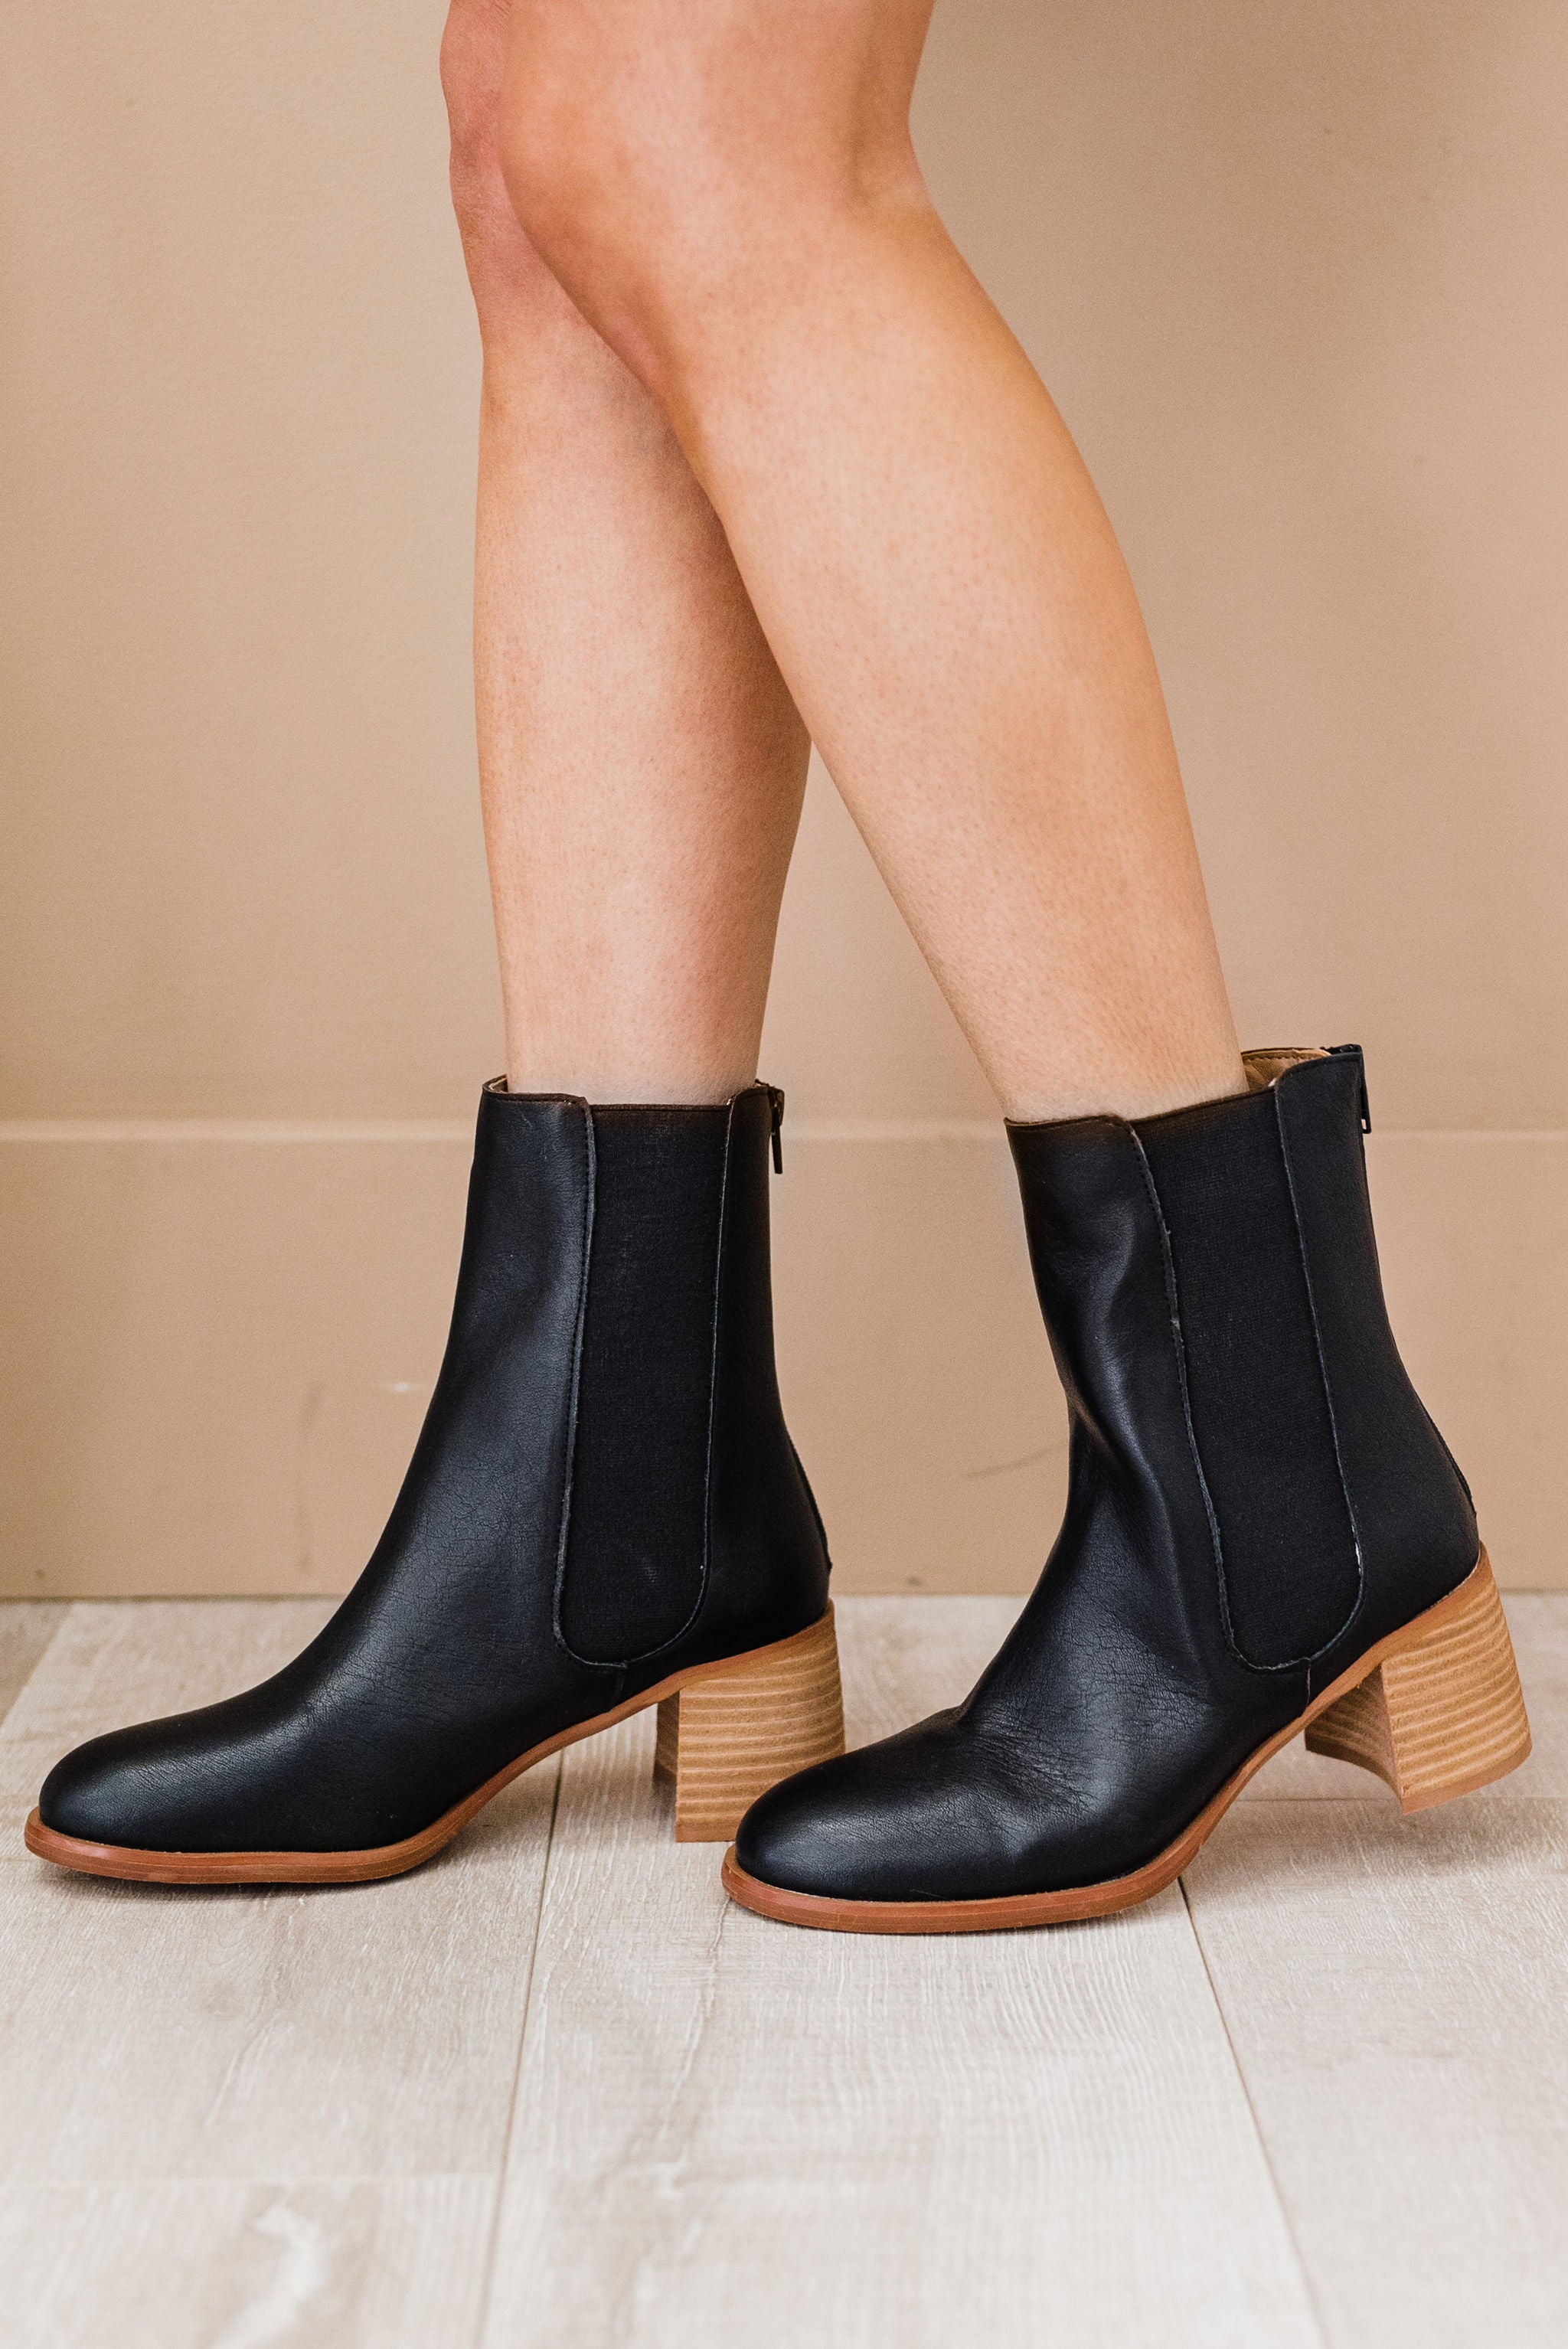 women ankle boots low heel winter fashion